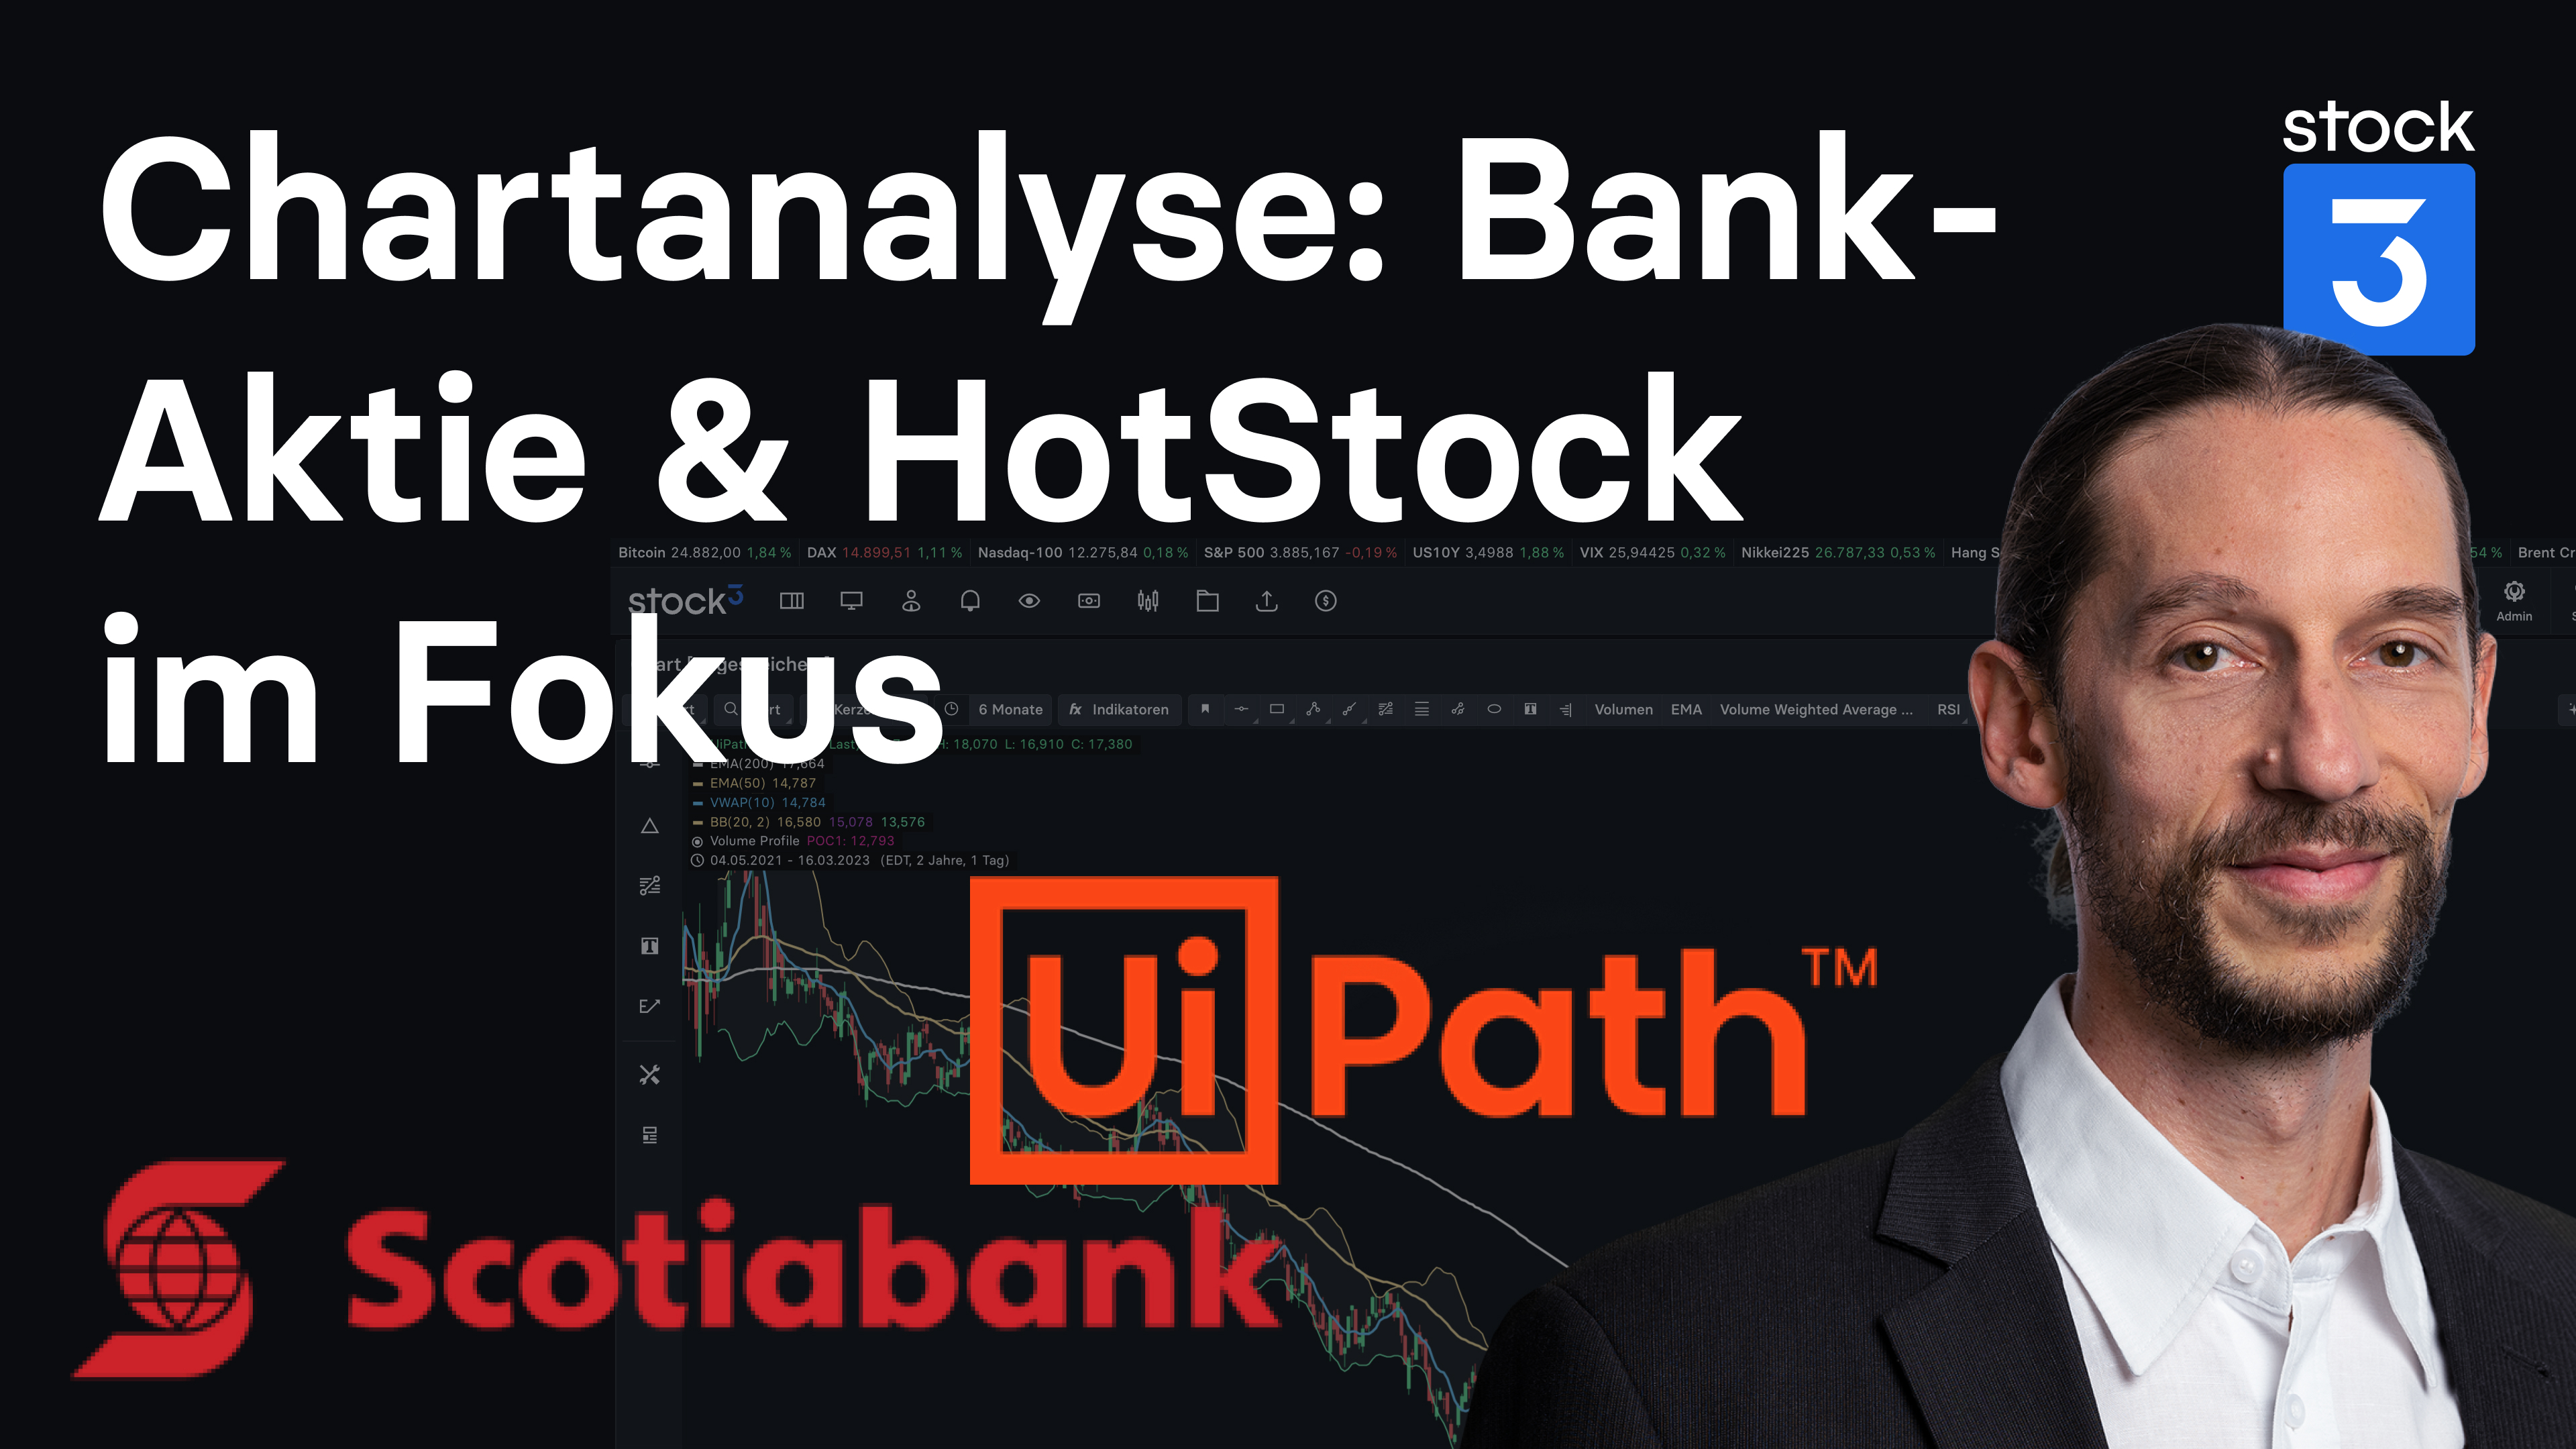 Bank-Aktie-KI-HotStock-im-Chart-Check-stock3-Experte-André-Rain-Valentin-Schelbert-stock3.com-1